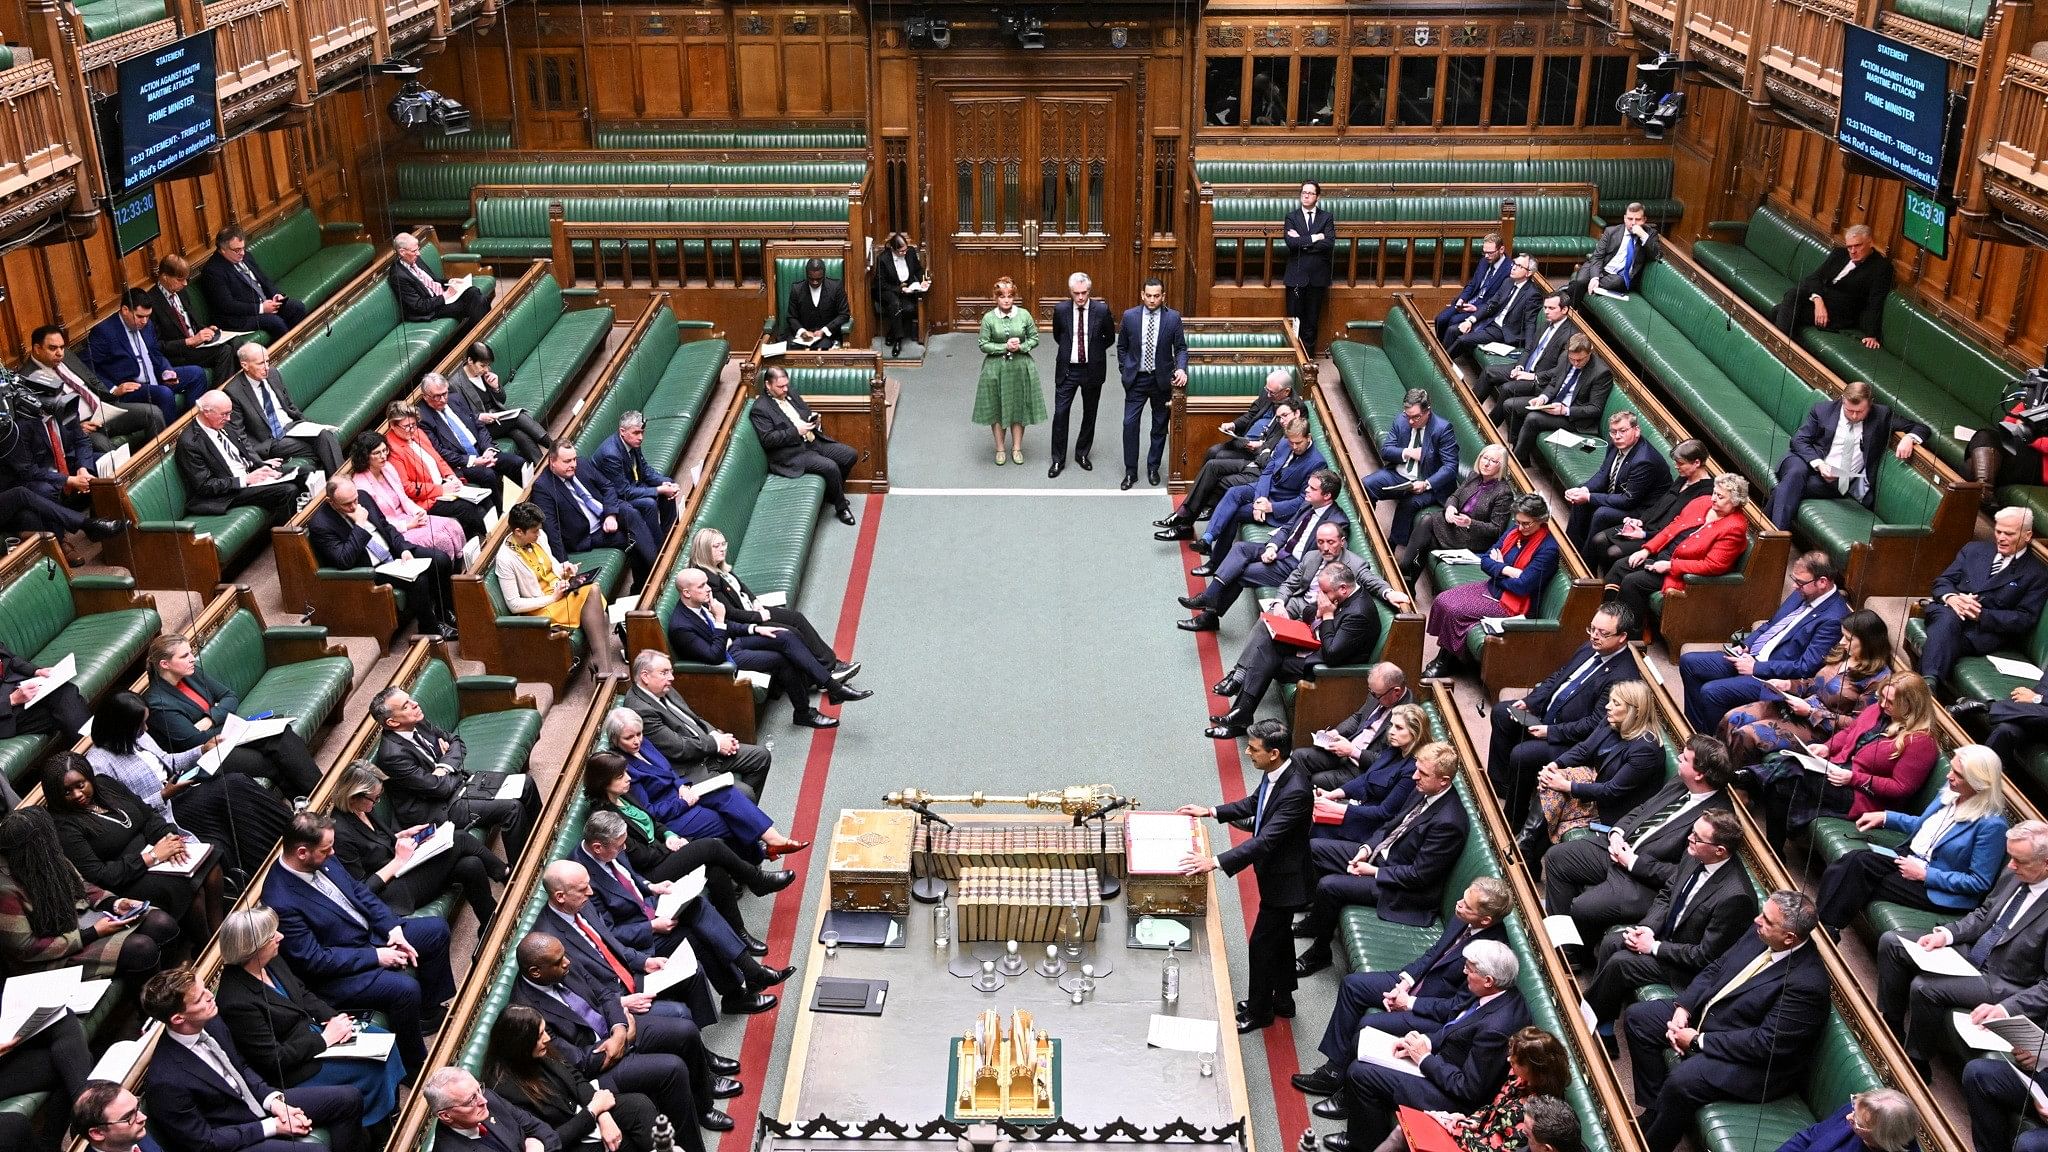 <div class="paragraphs"><p>A file image of a UK Parliament session in progress.&nbsp;</p></div>